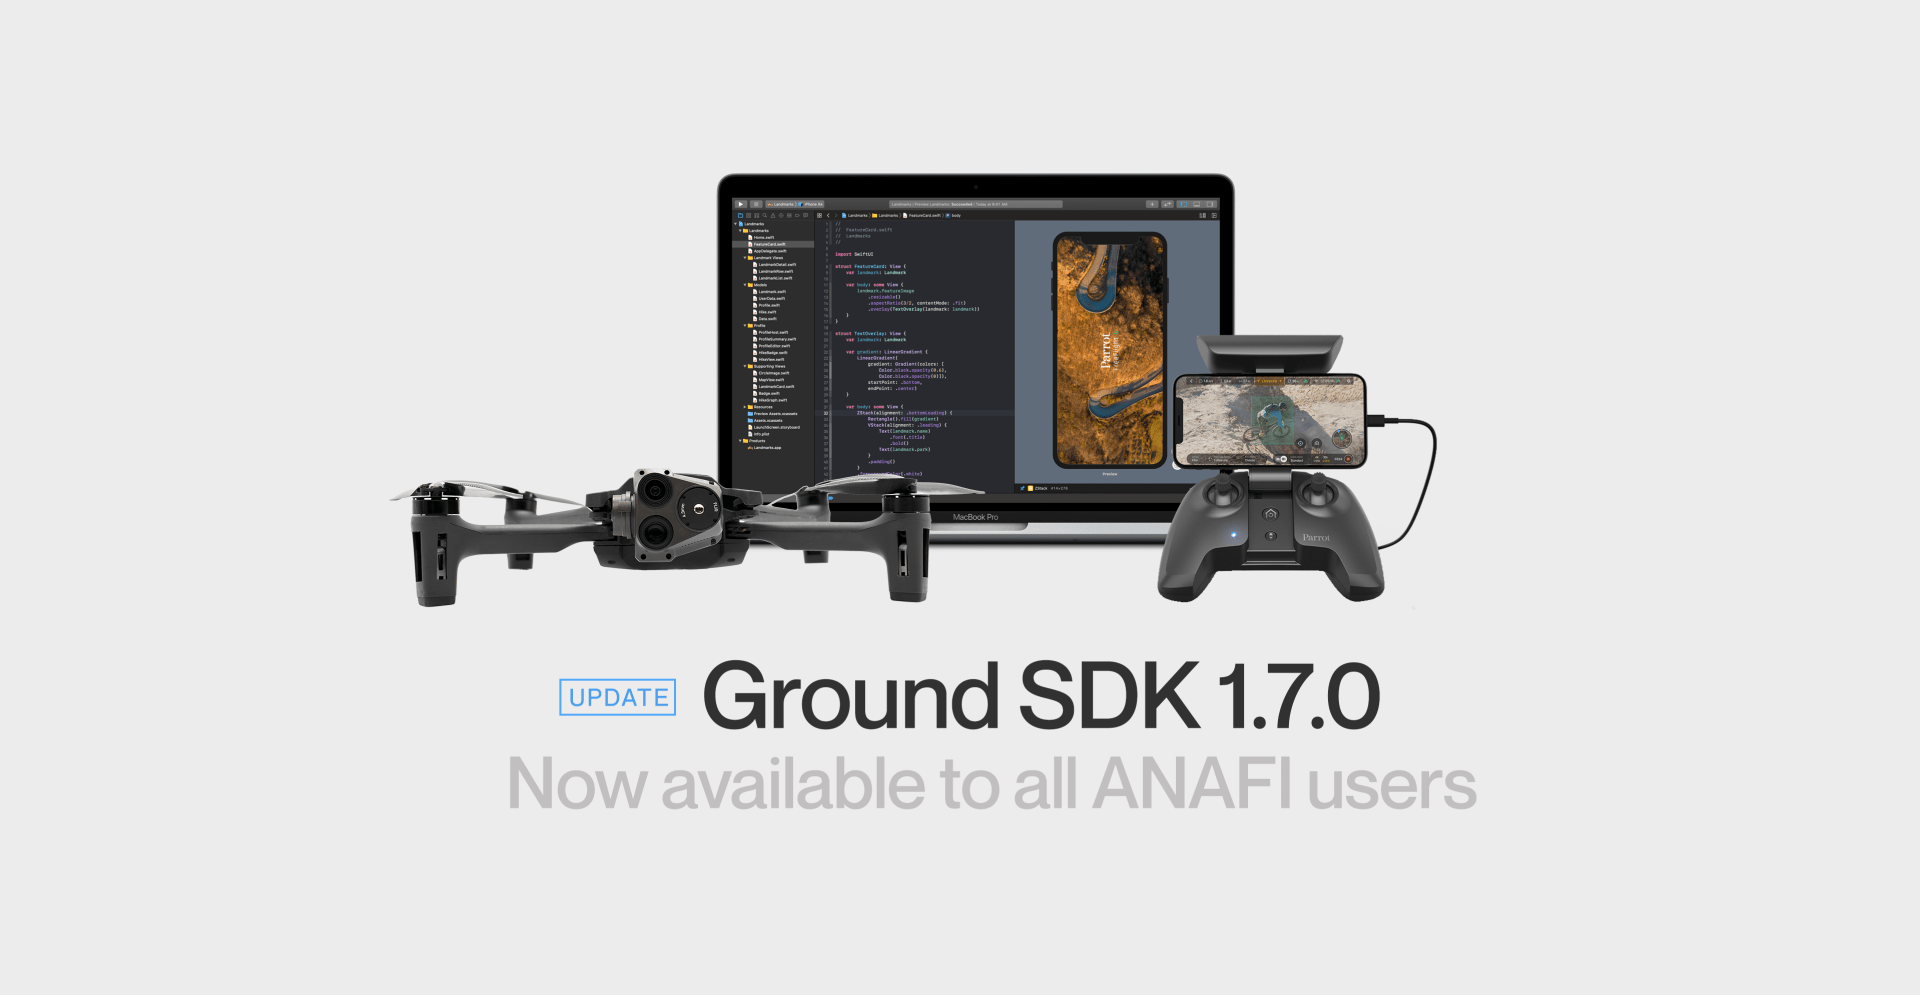 Ground SDK 1.7.0